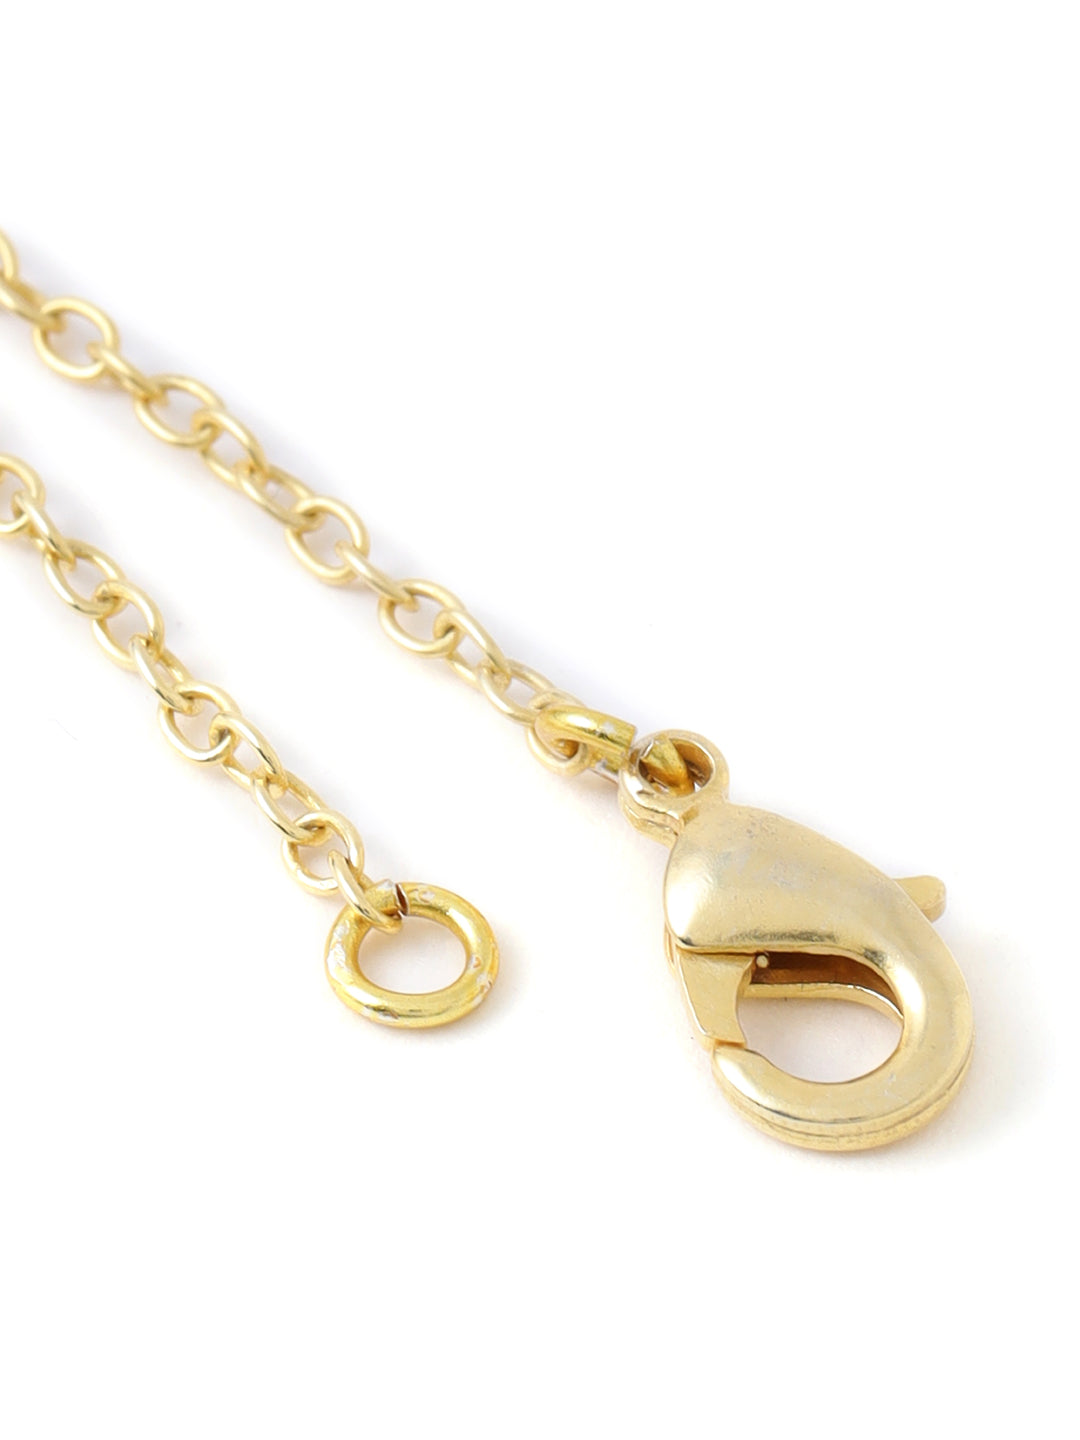 Clove Watch Chain Charm - Golden